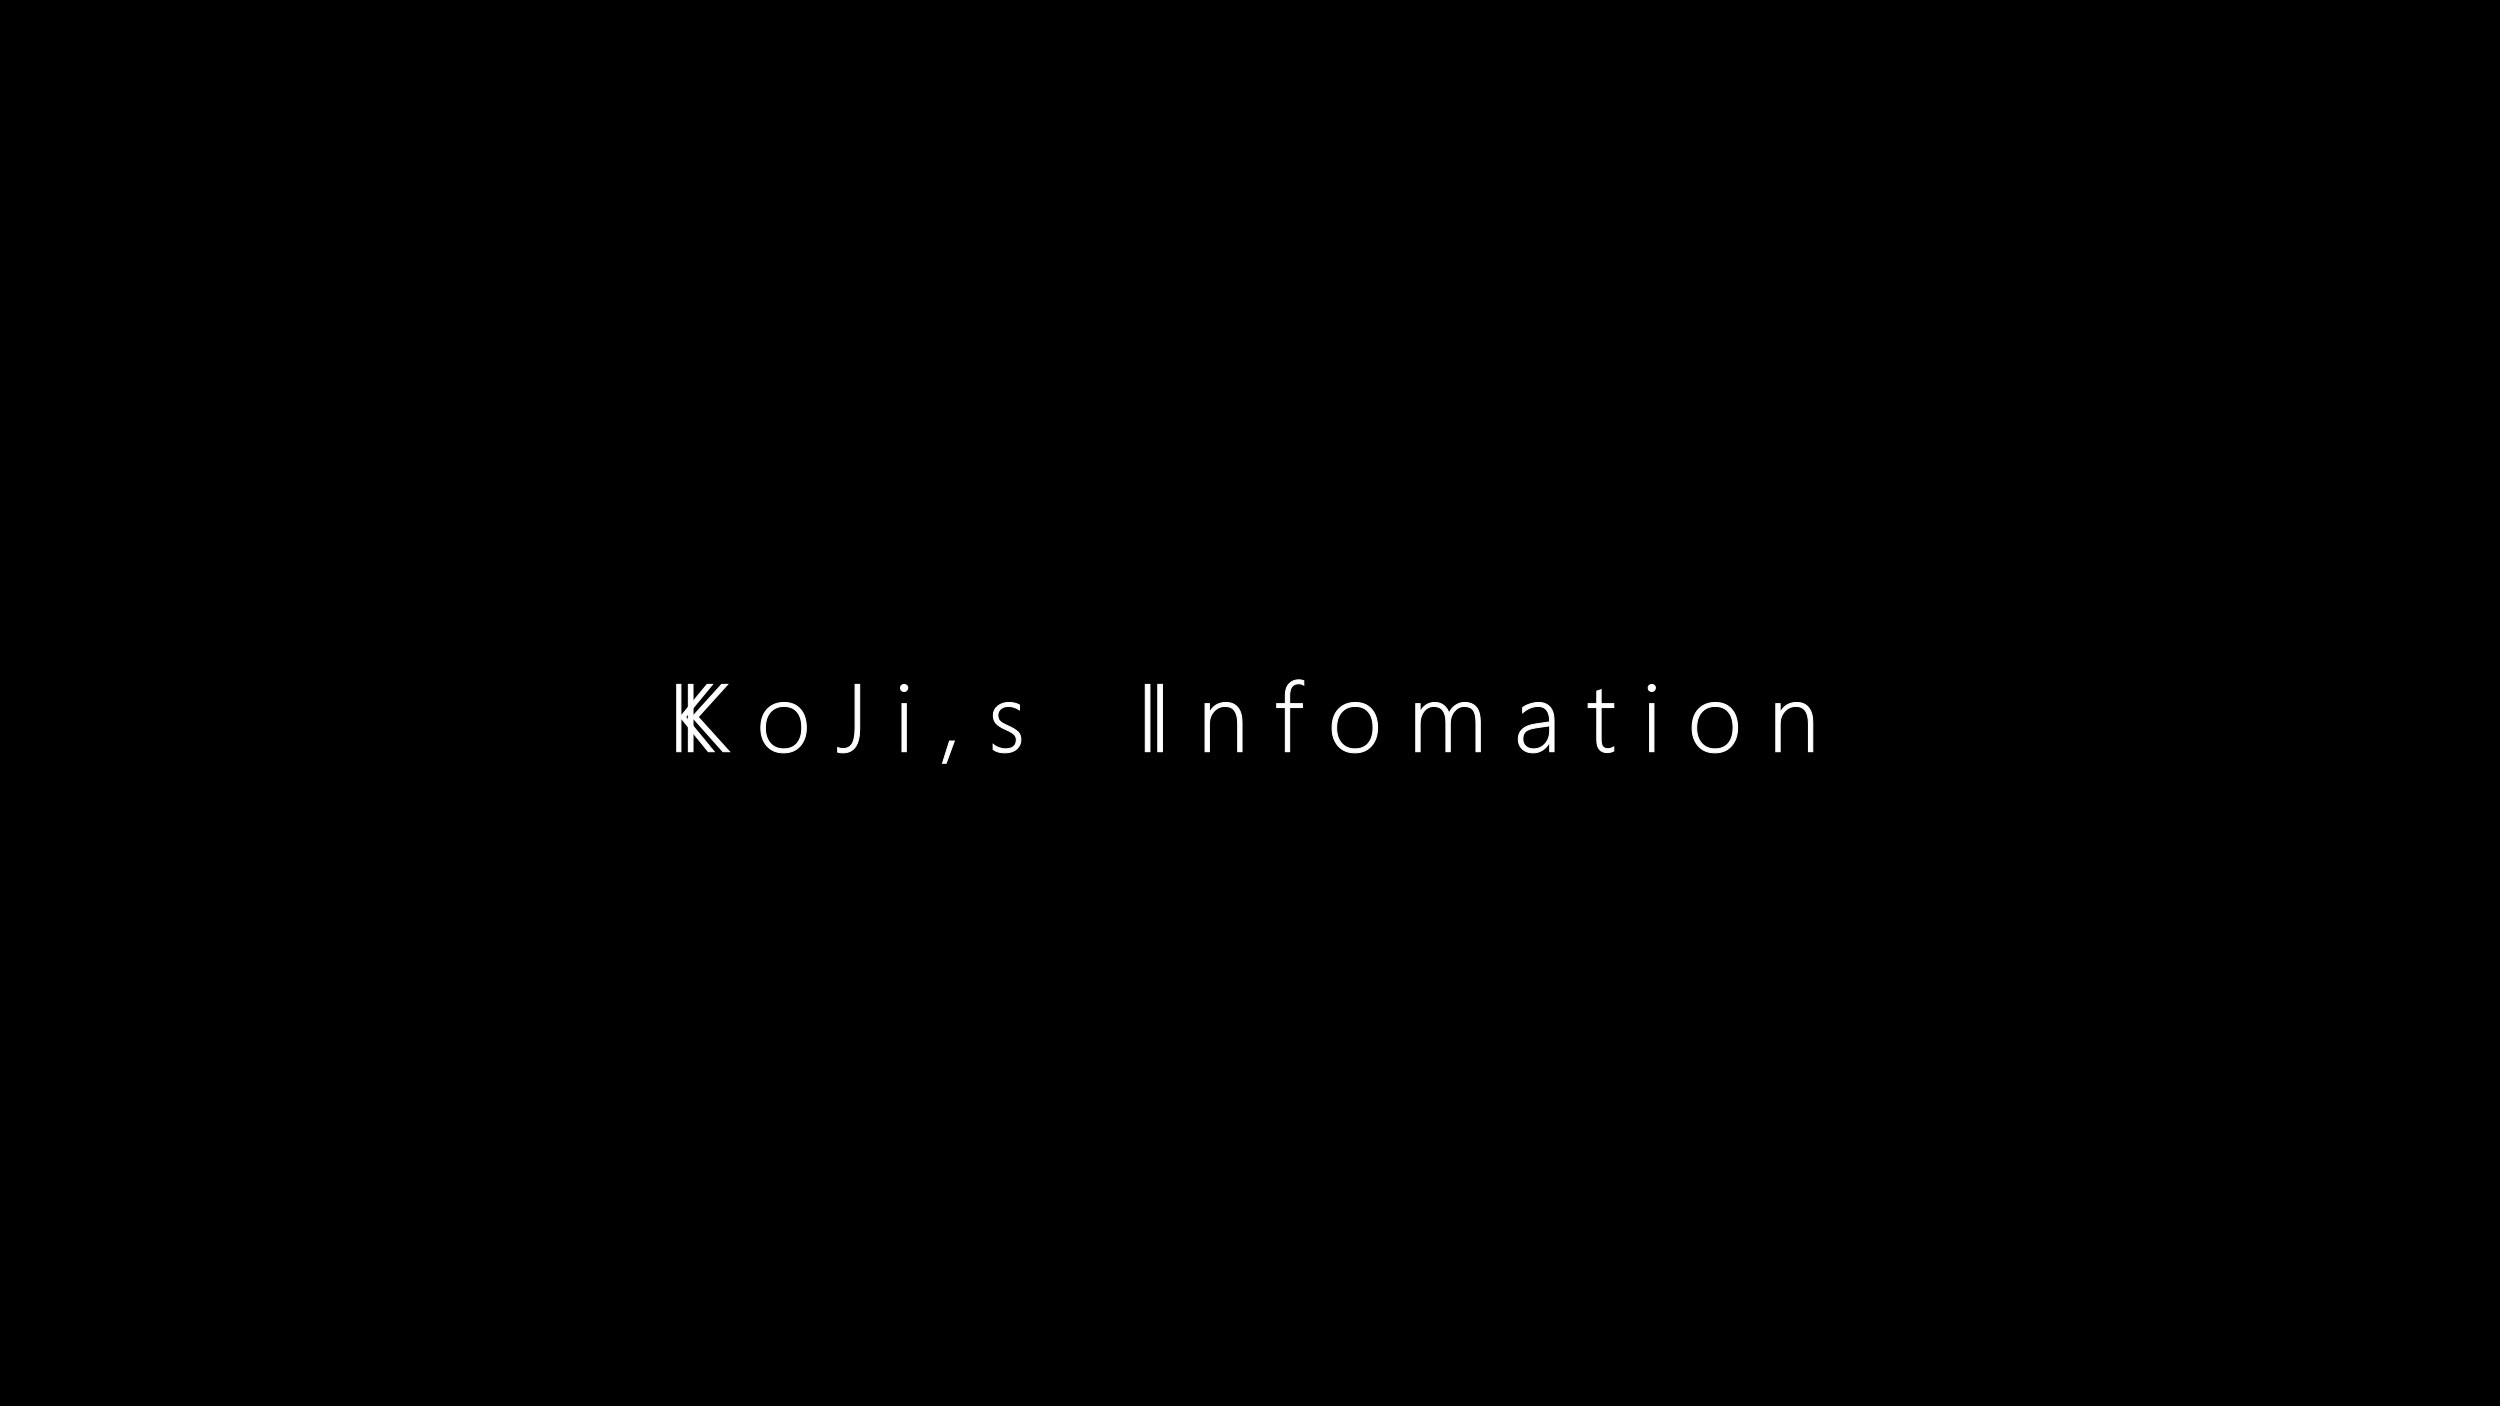 KoJi,s Infomation